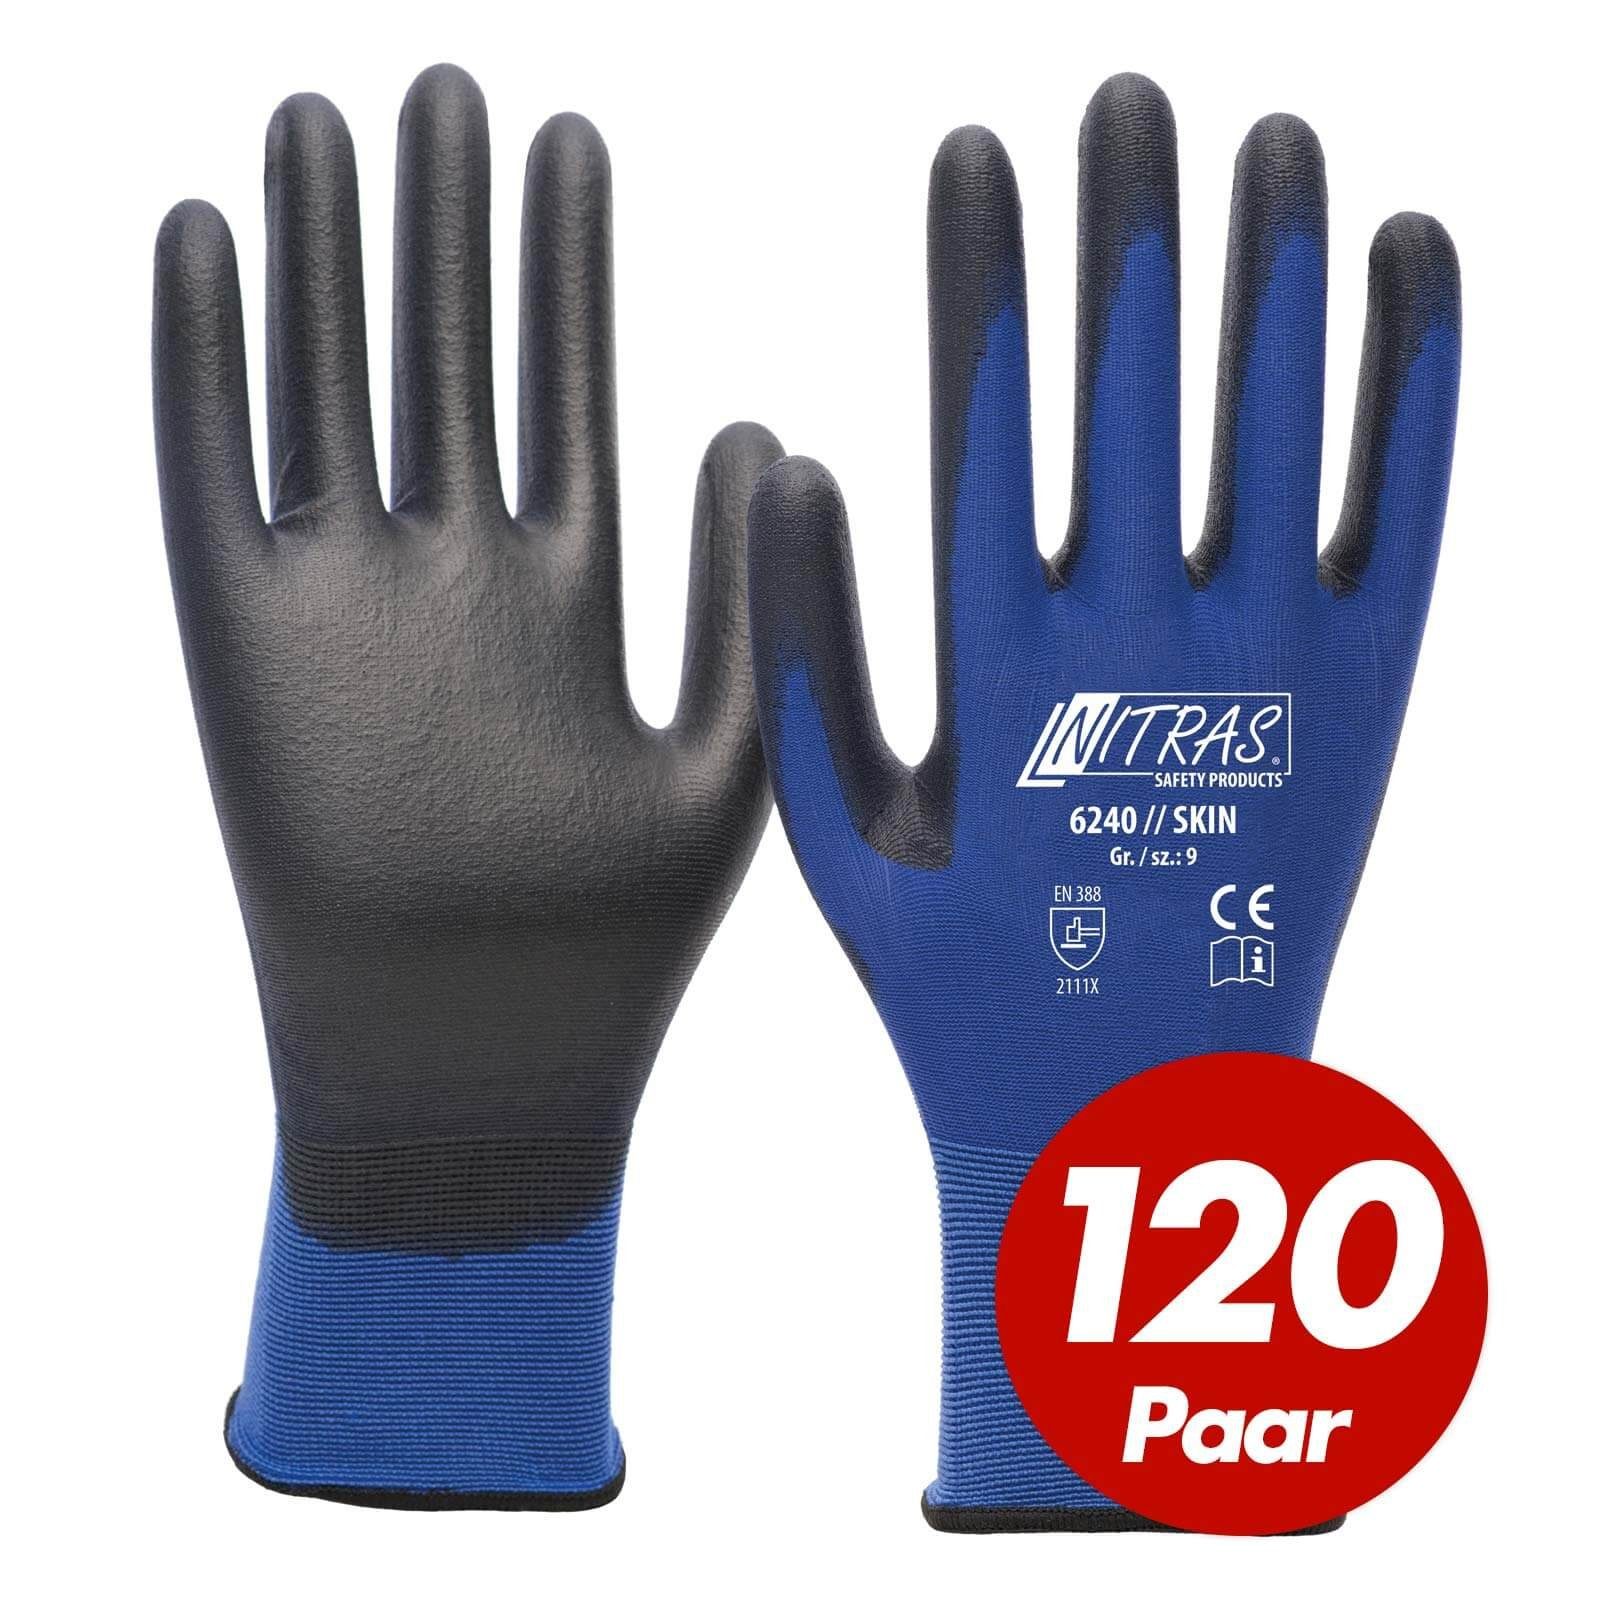 Nitras Nitril-Handschuhe NITRAS 6240 Skin Nylon-Strickhandschuhe, PU-Beschichtung - 120 Paar (Spar-Set) schwarz/blau